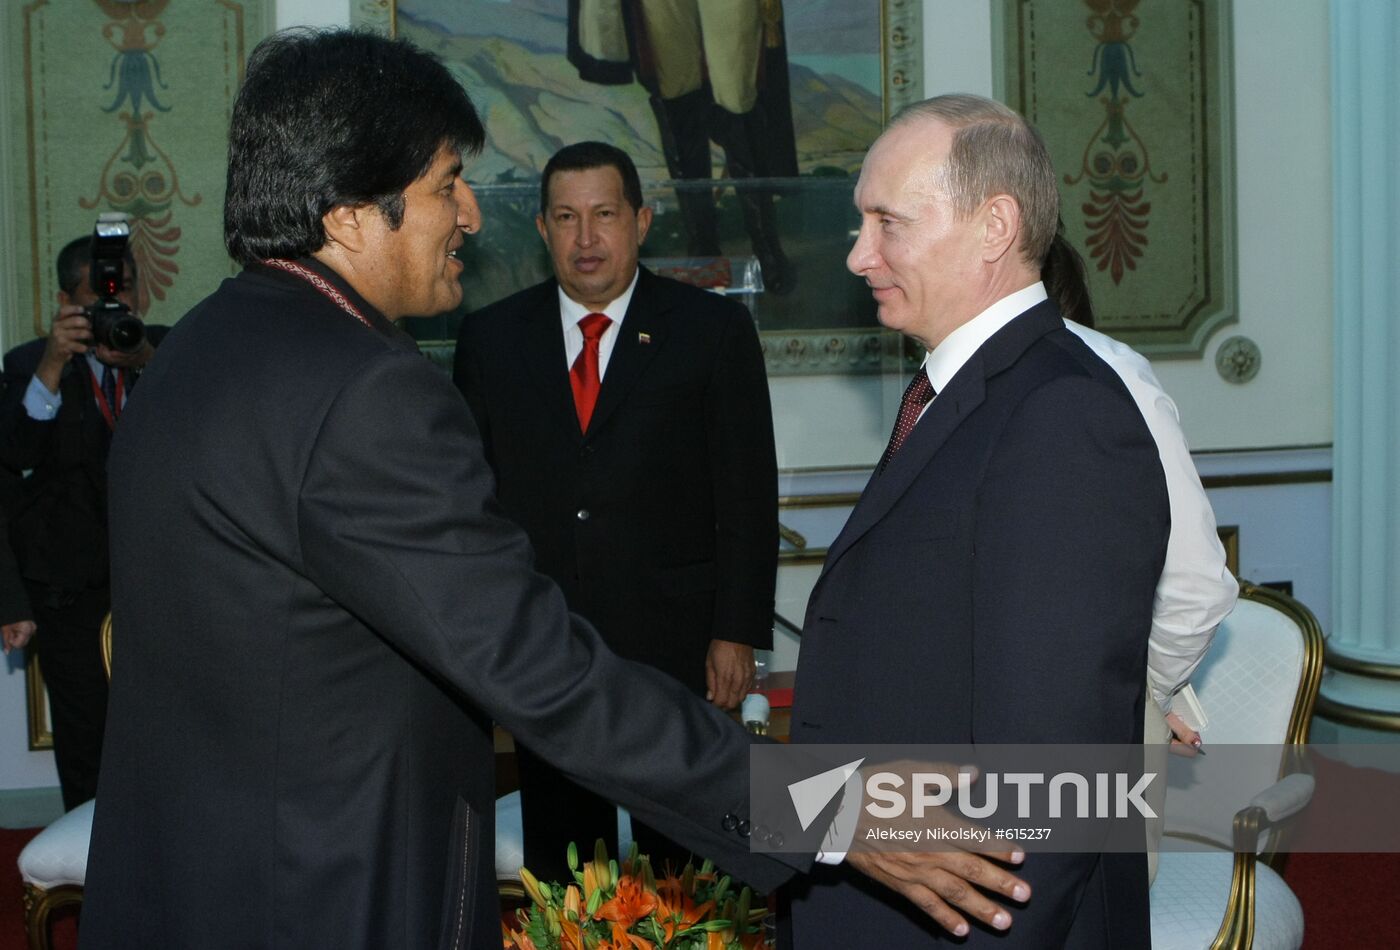 Vladimir Putin meets with Evo Morales